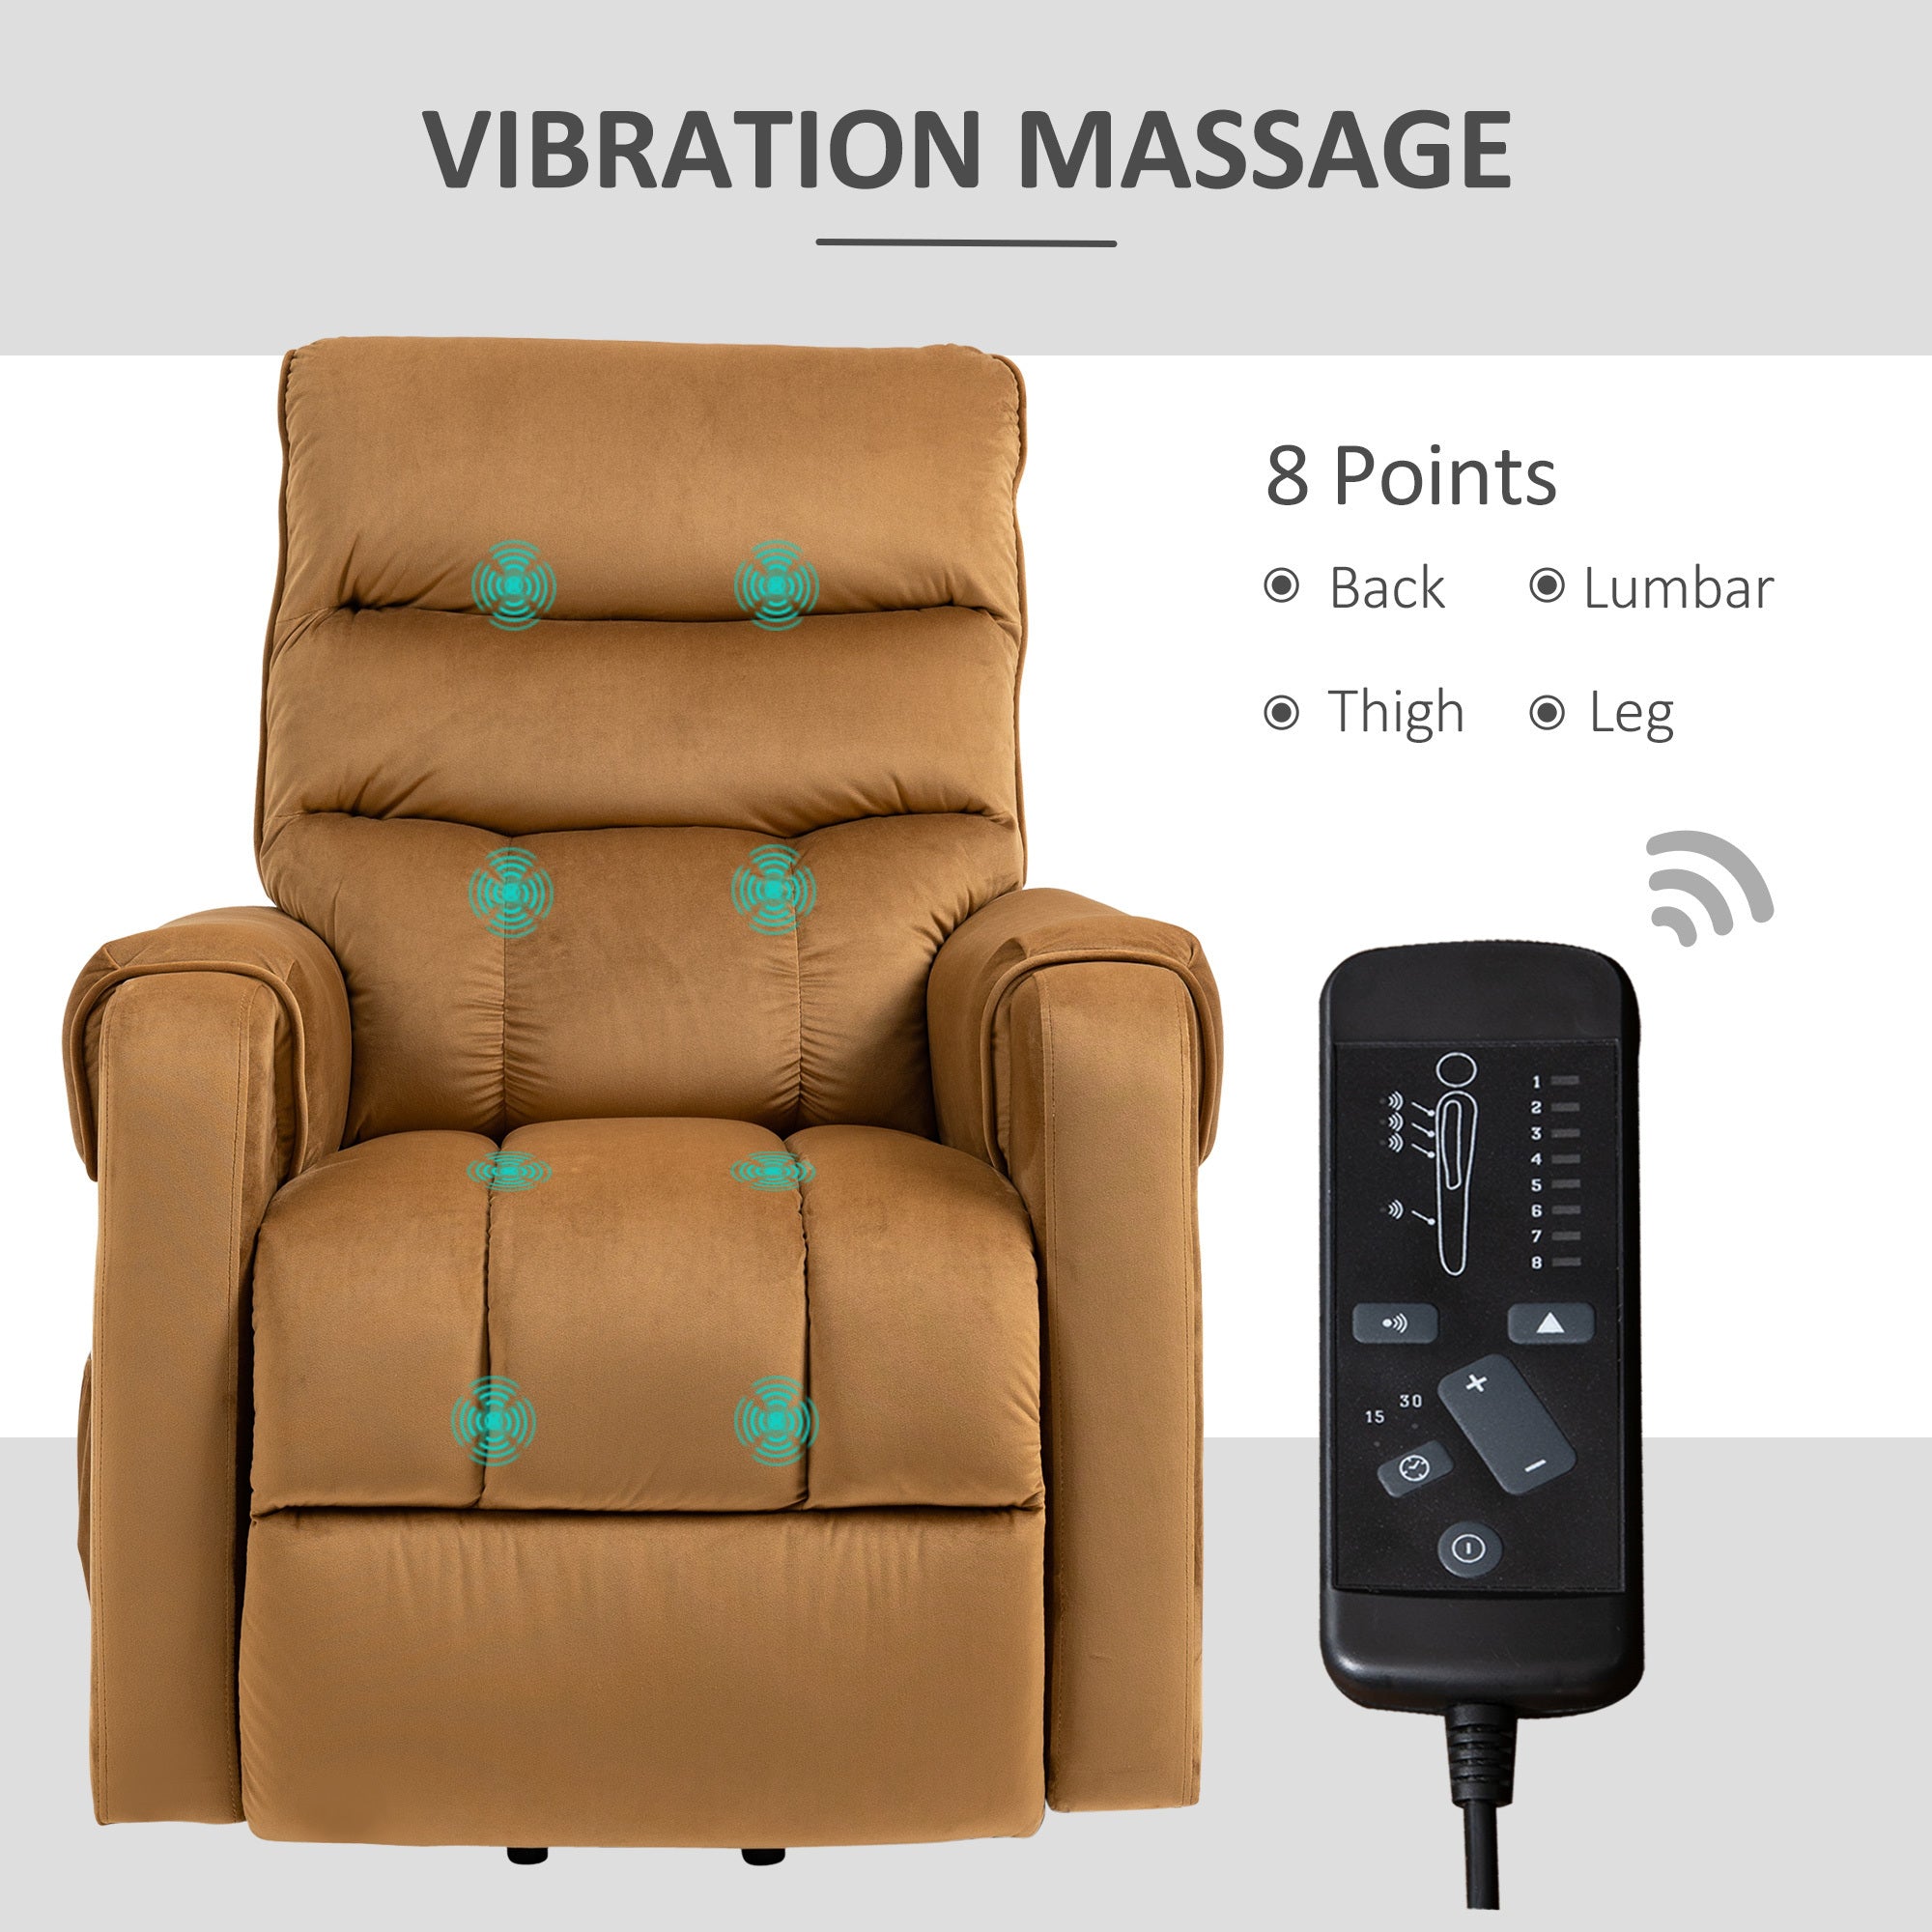 Velvet Touch Power Lift Recliner Chair with Vibration Massage, massage points